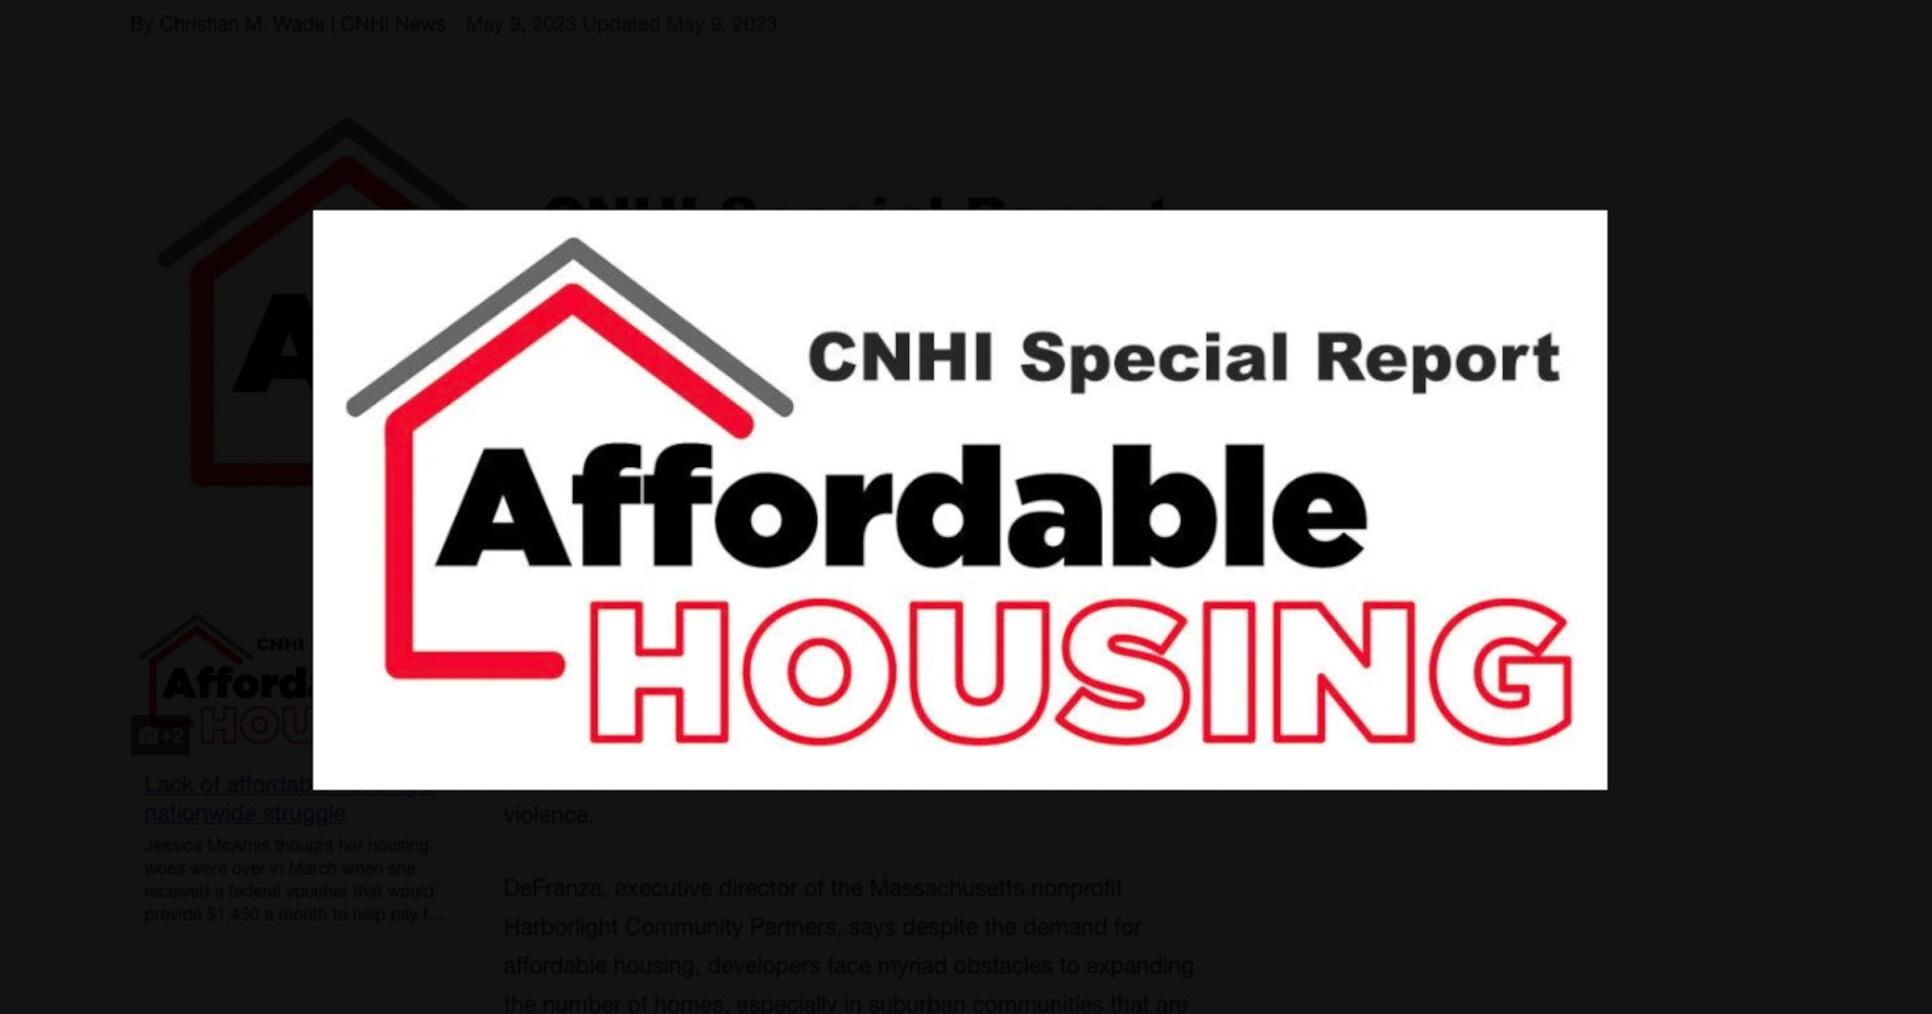 Cities tackle housing crisis - Herald